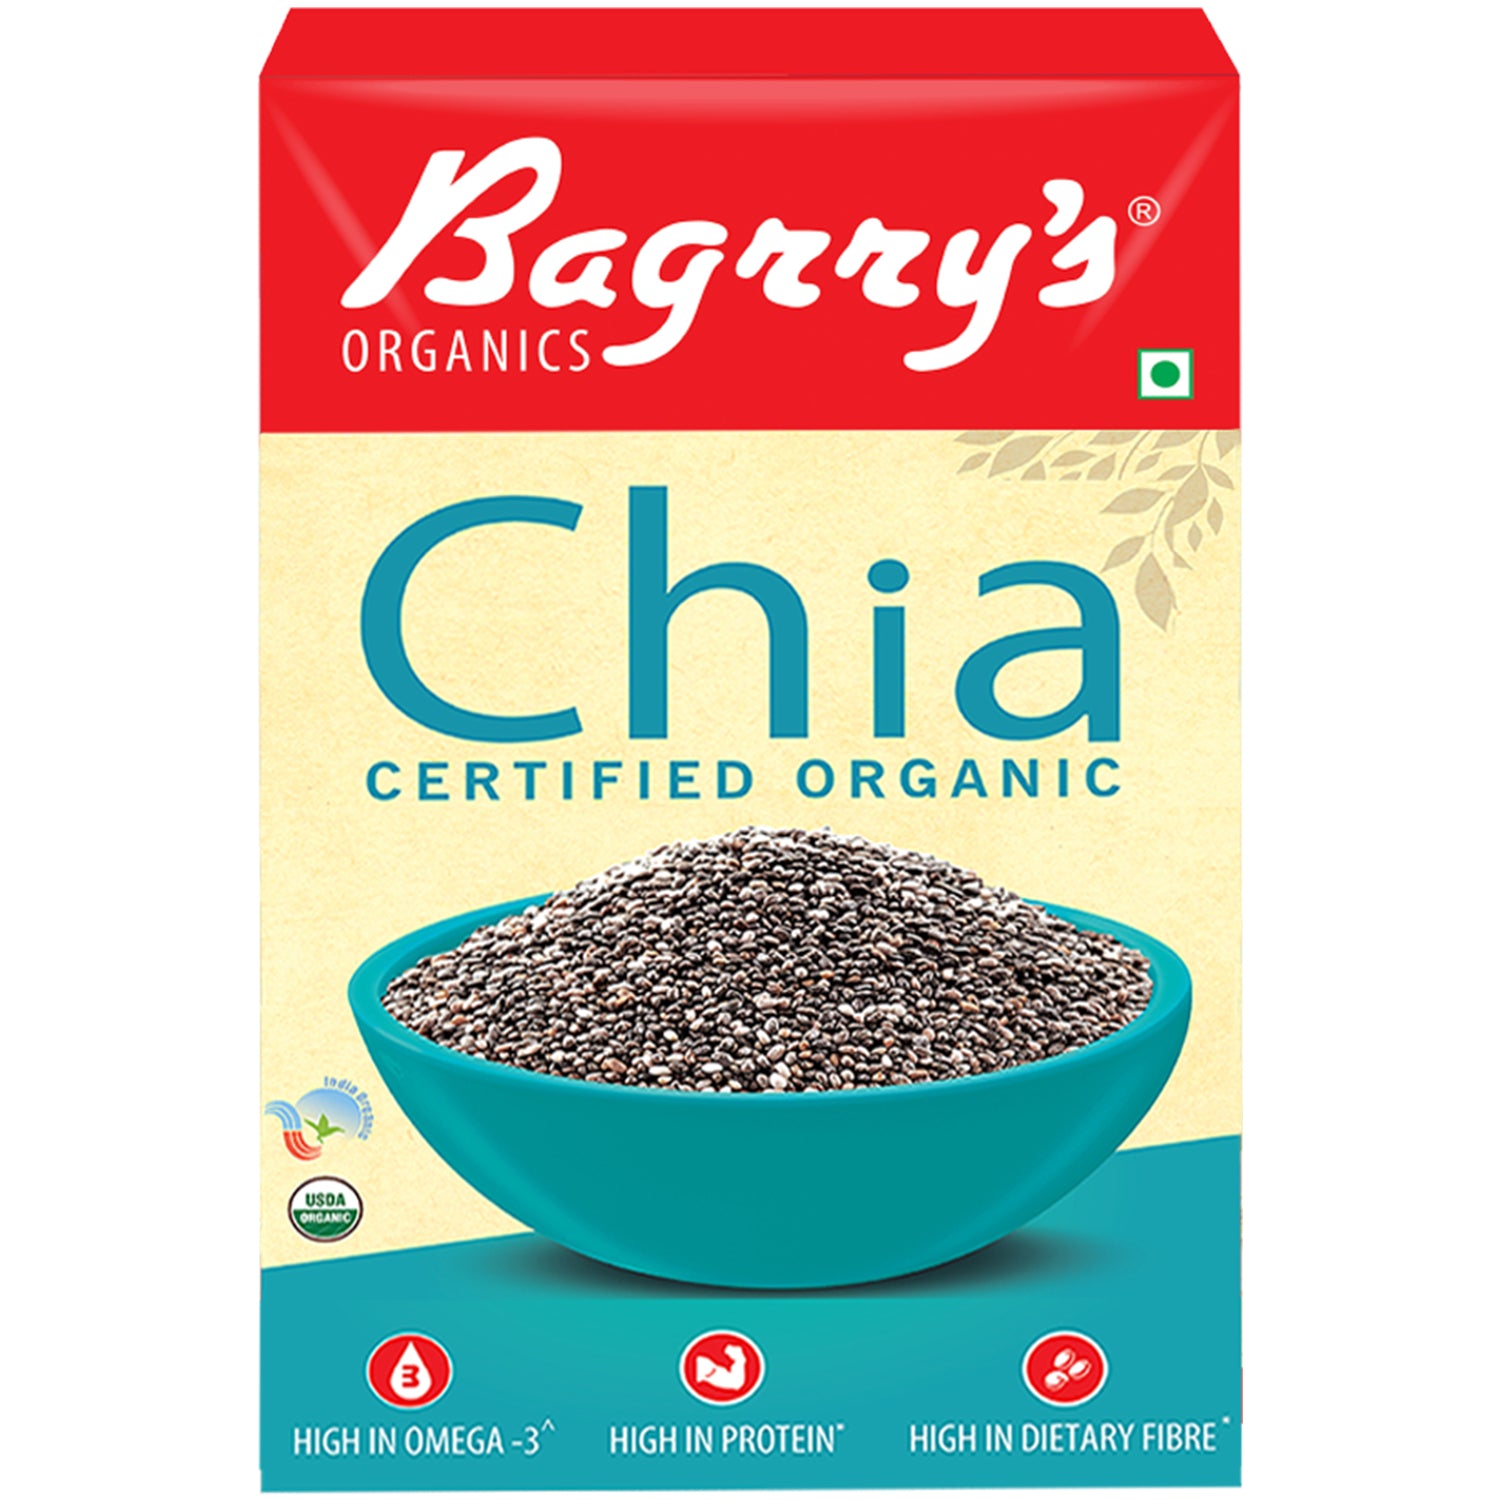 Organic Chia Seeds, 150g